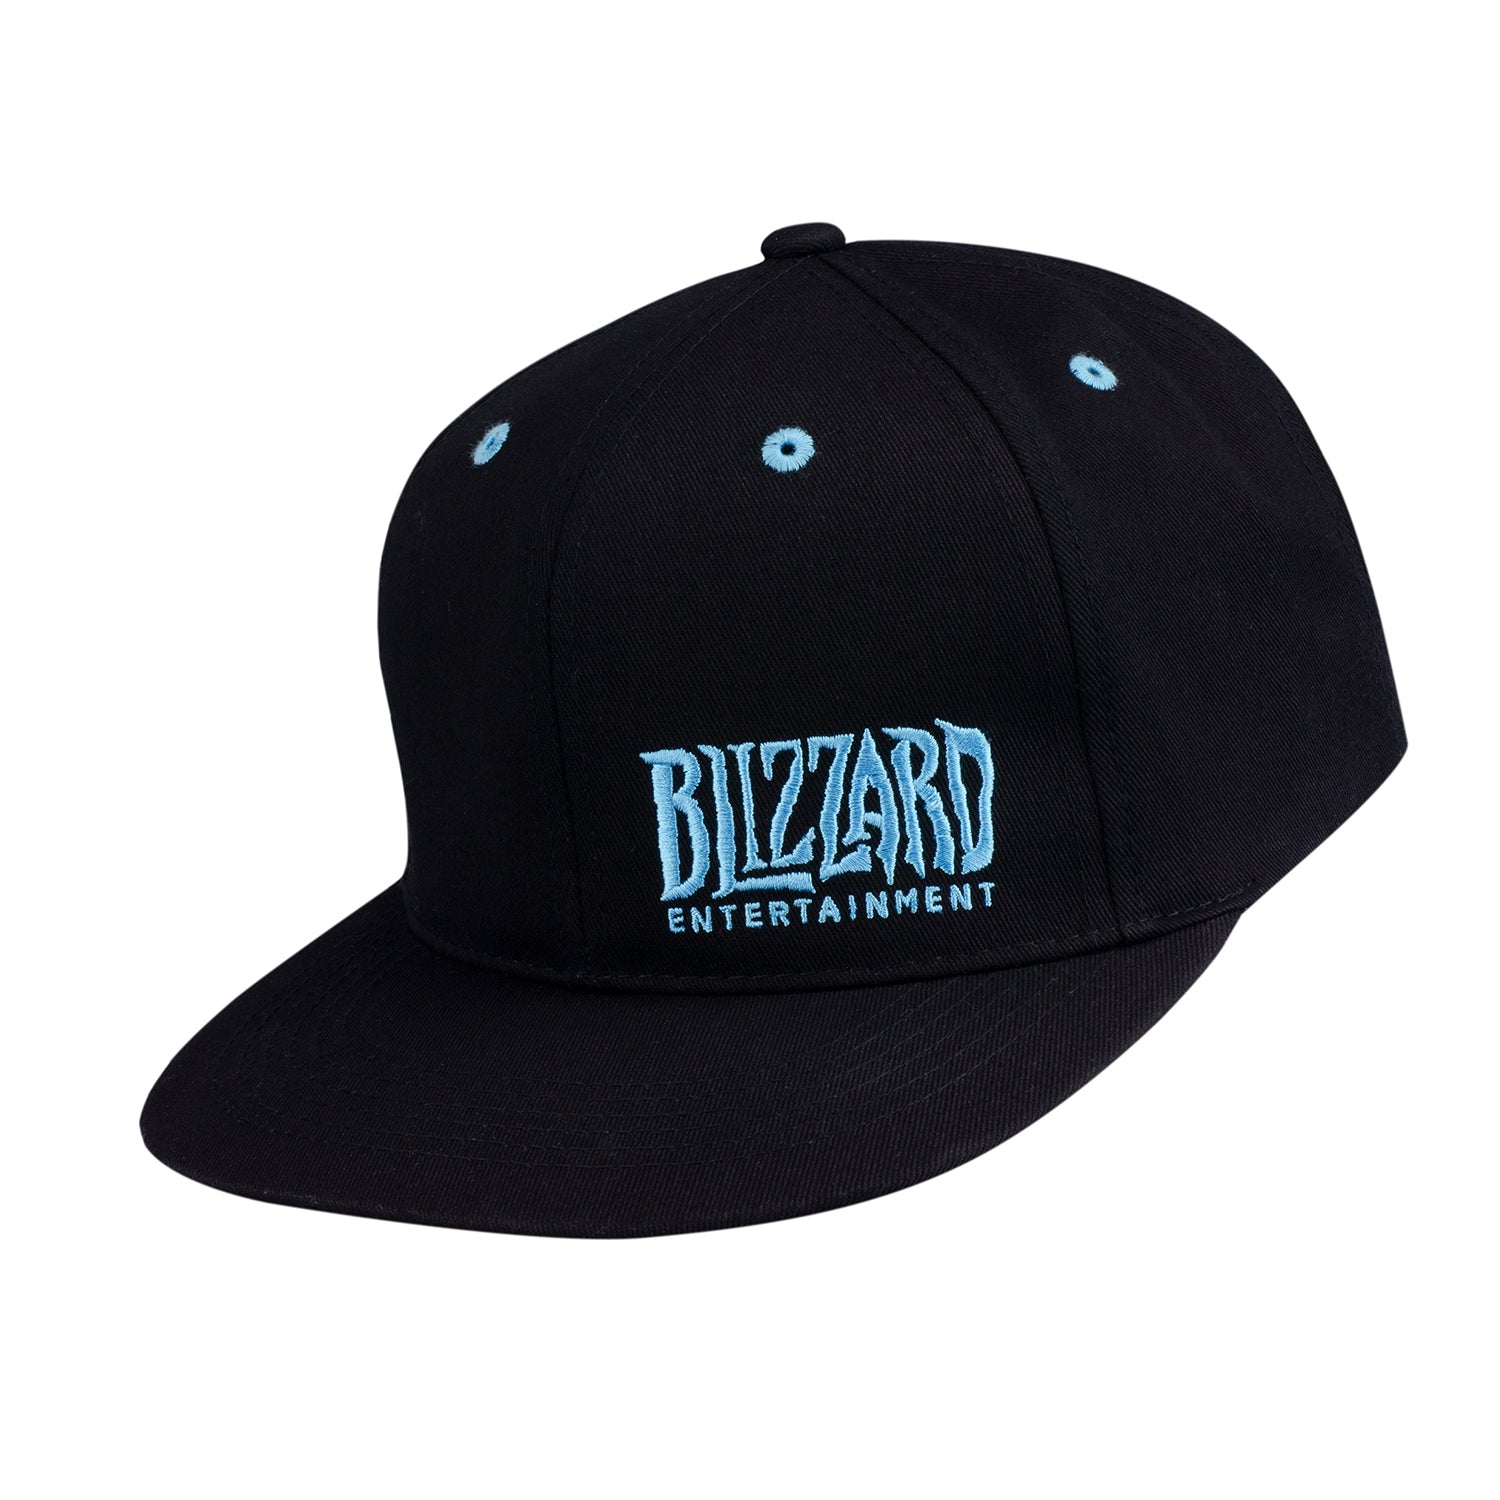 Blizzard Entertainment Black Flatbill Snapback Hat - Left View